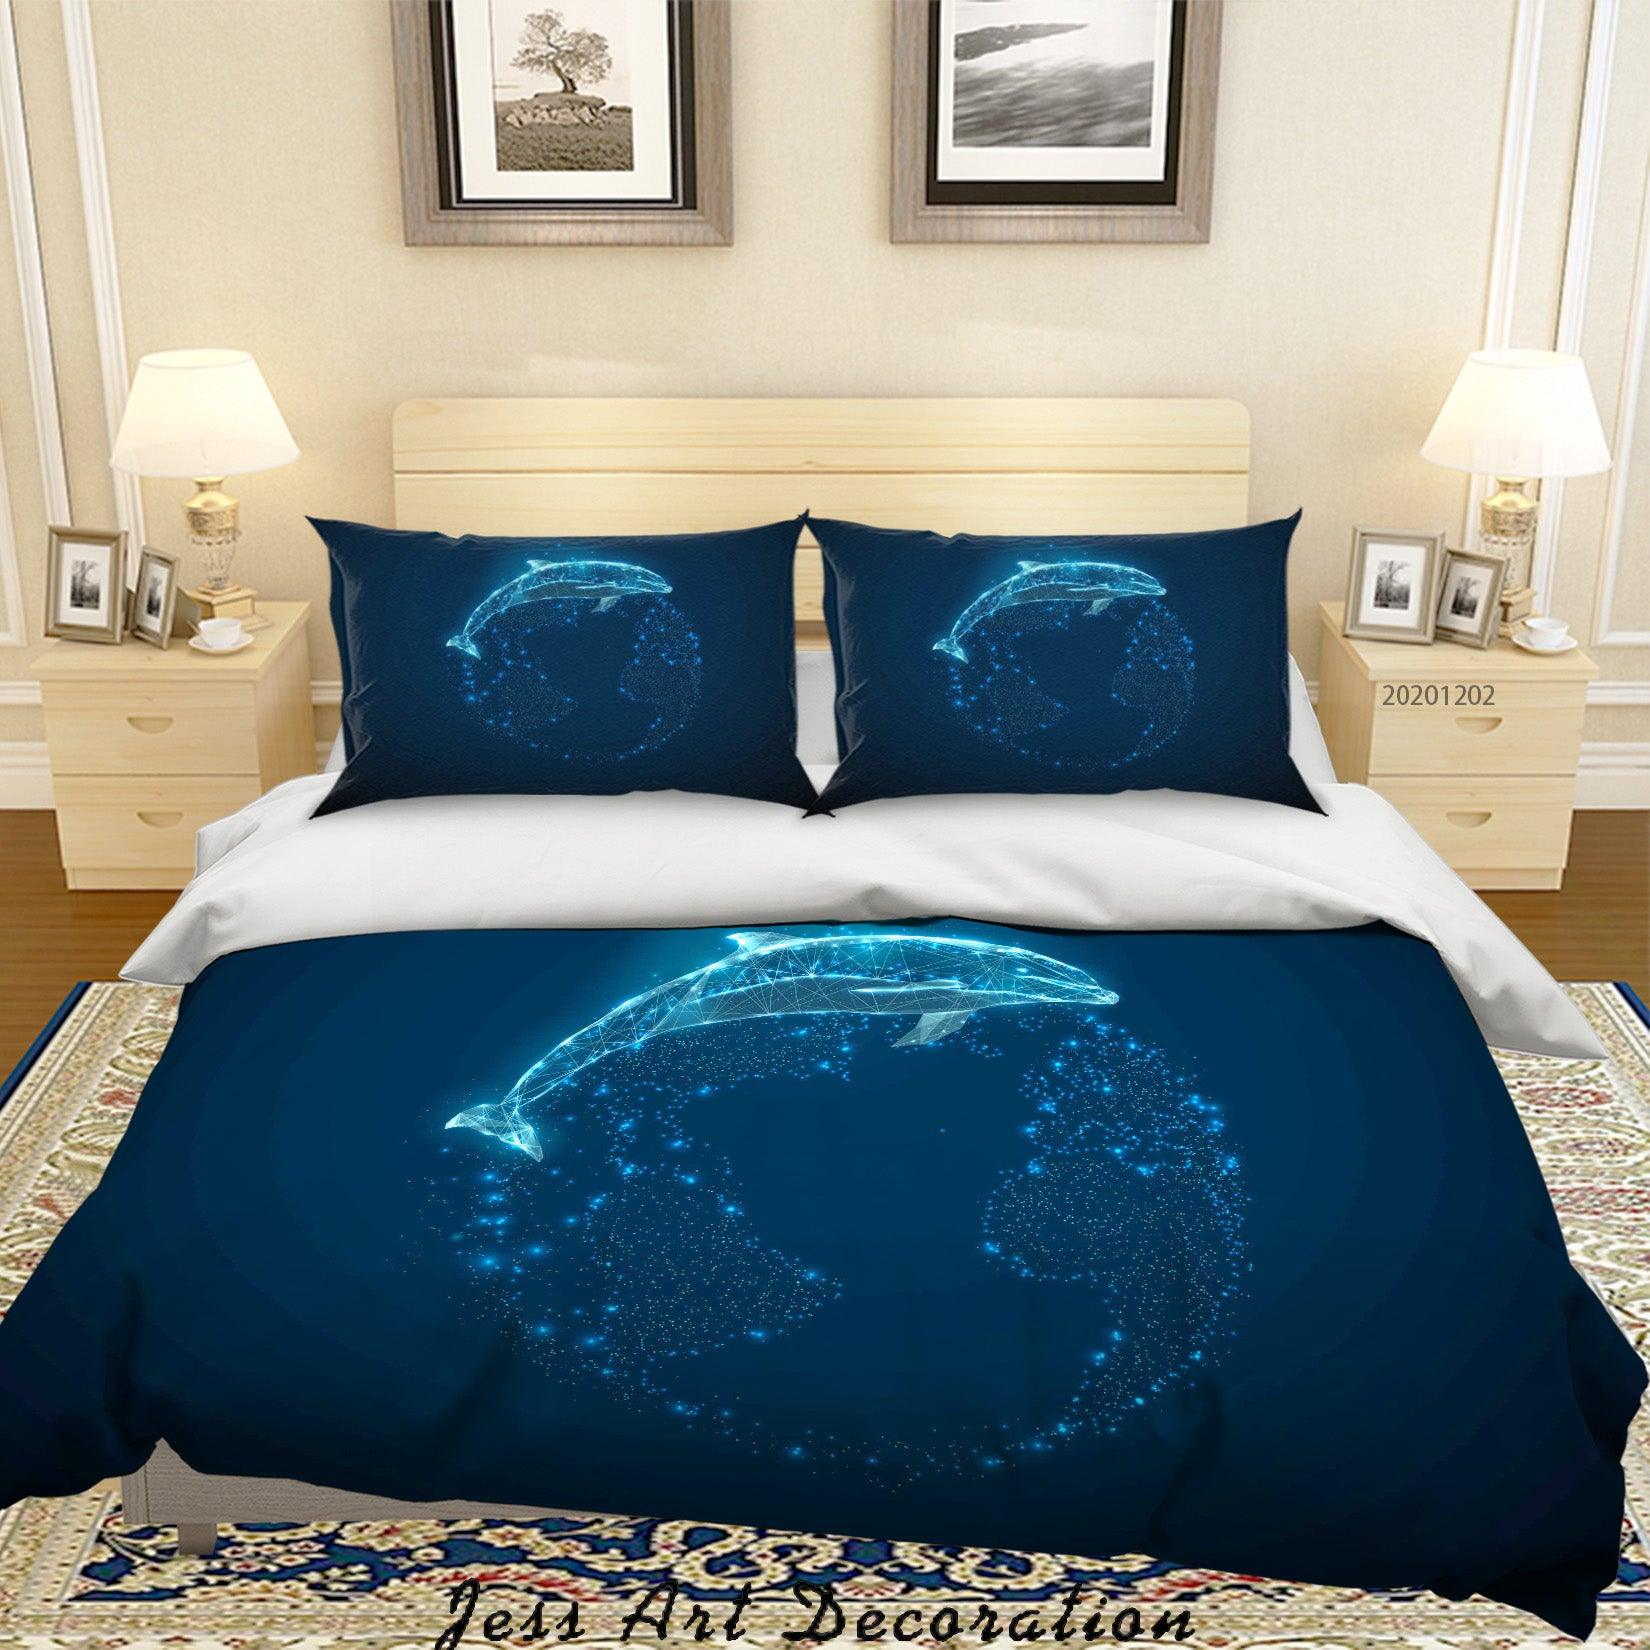 3D Abstract Blue Ocean Glowing Dolphin Quilt Cover Set Bedding Set Duvet Cover Pillowcases LXL- Jess Art Decoration